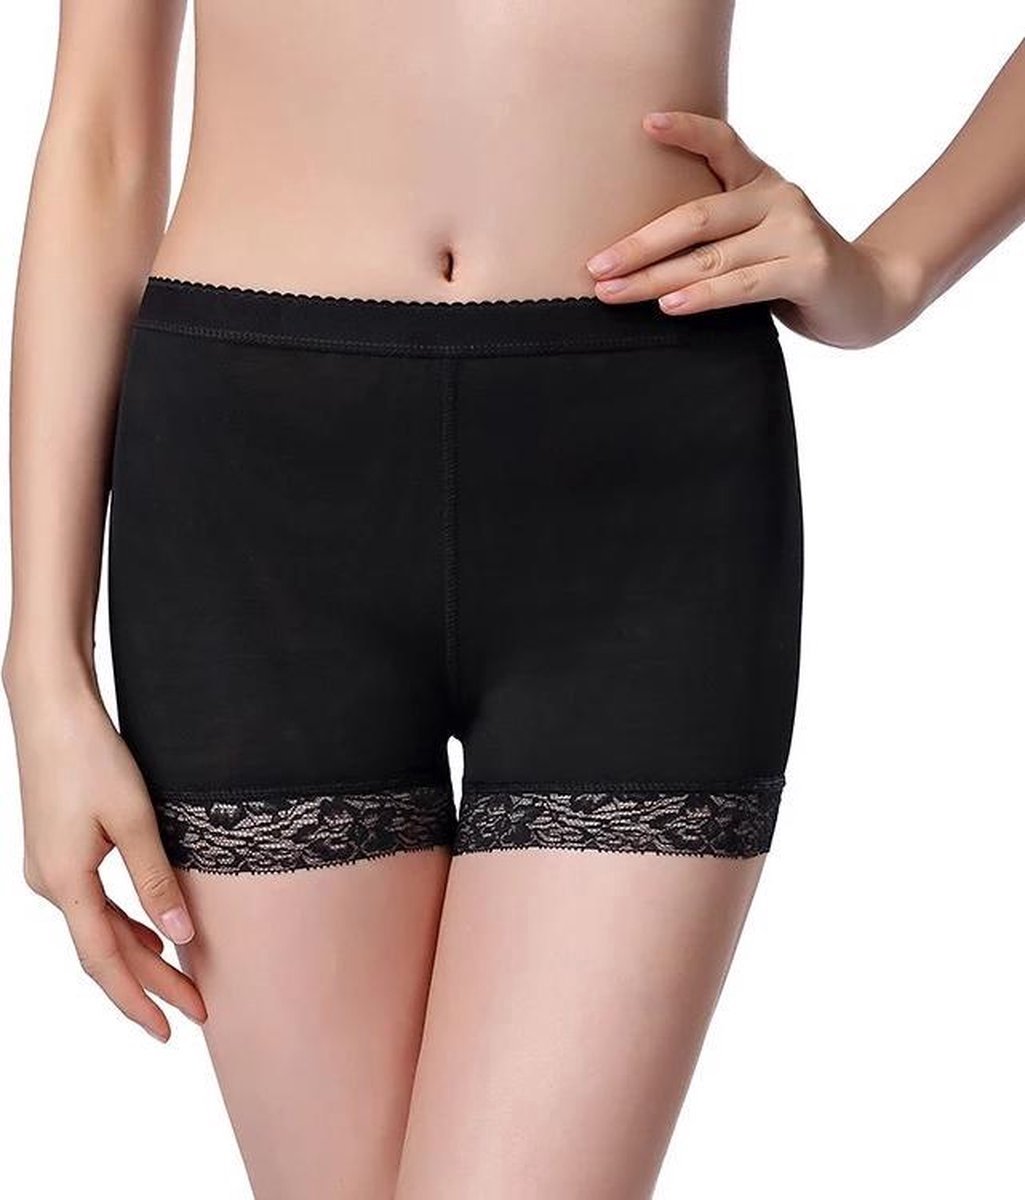 Finnacle - Verhoog je billen met onze Butt lifter panty - Zwart - Large - Volle billen - Ondergoed - Lingerie - Shapewear